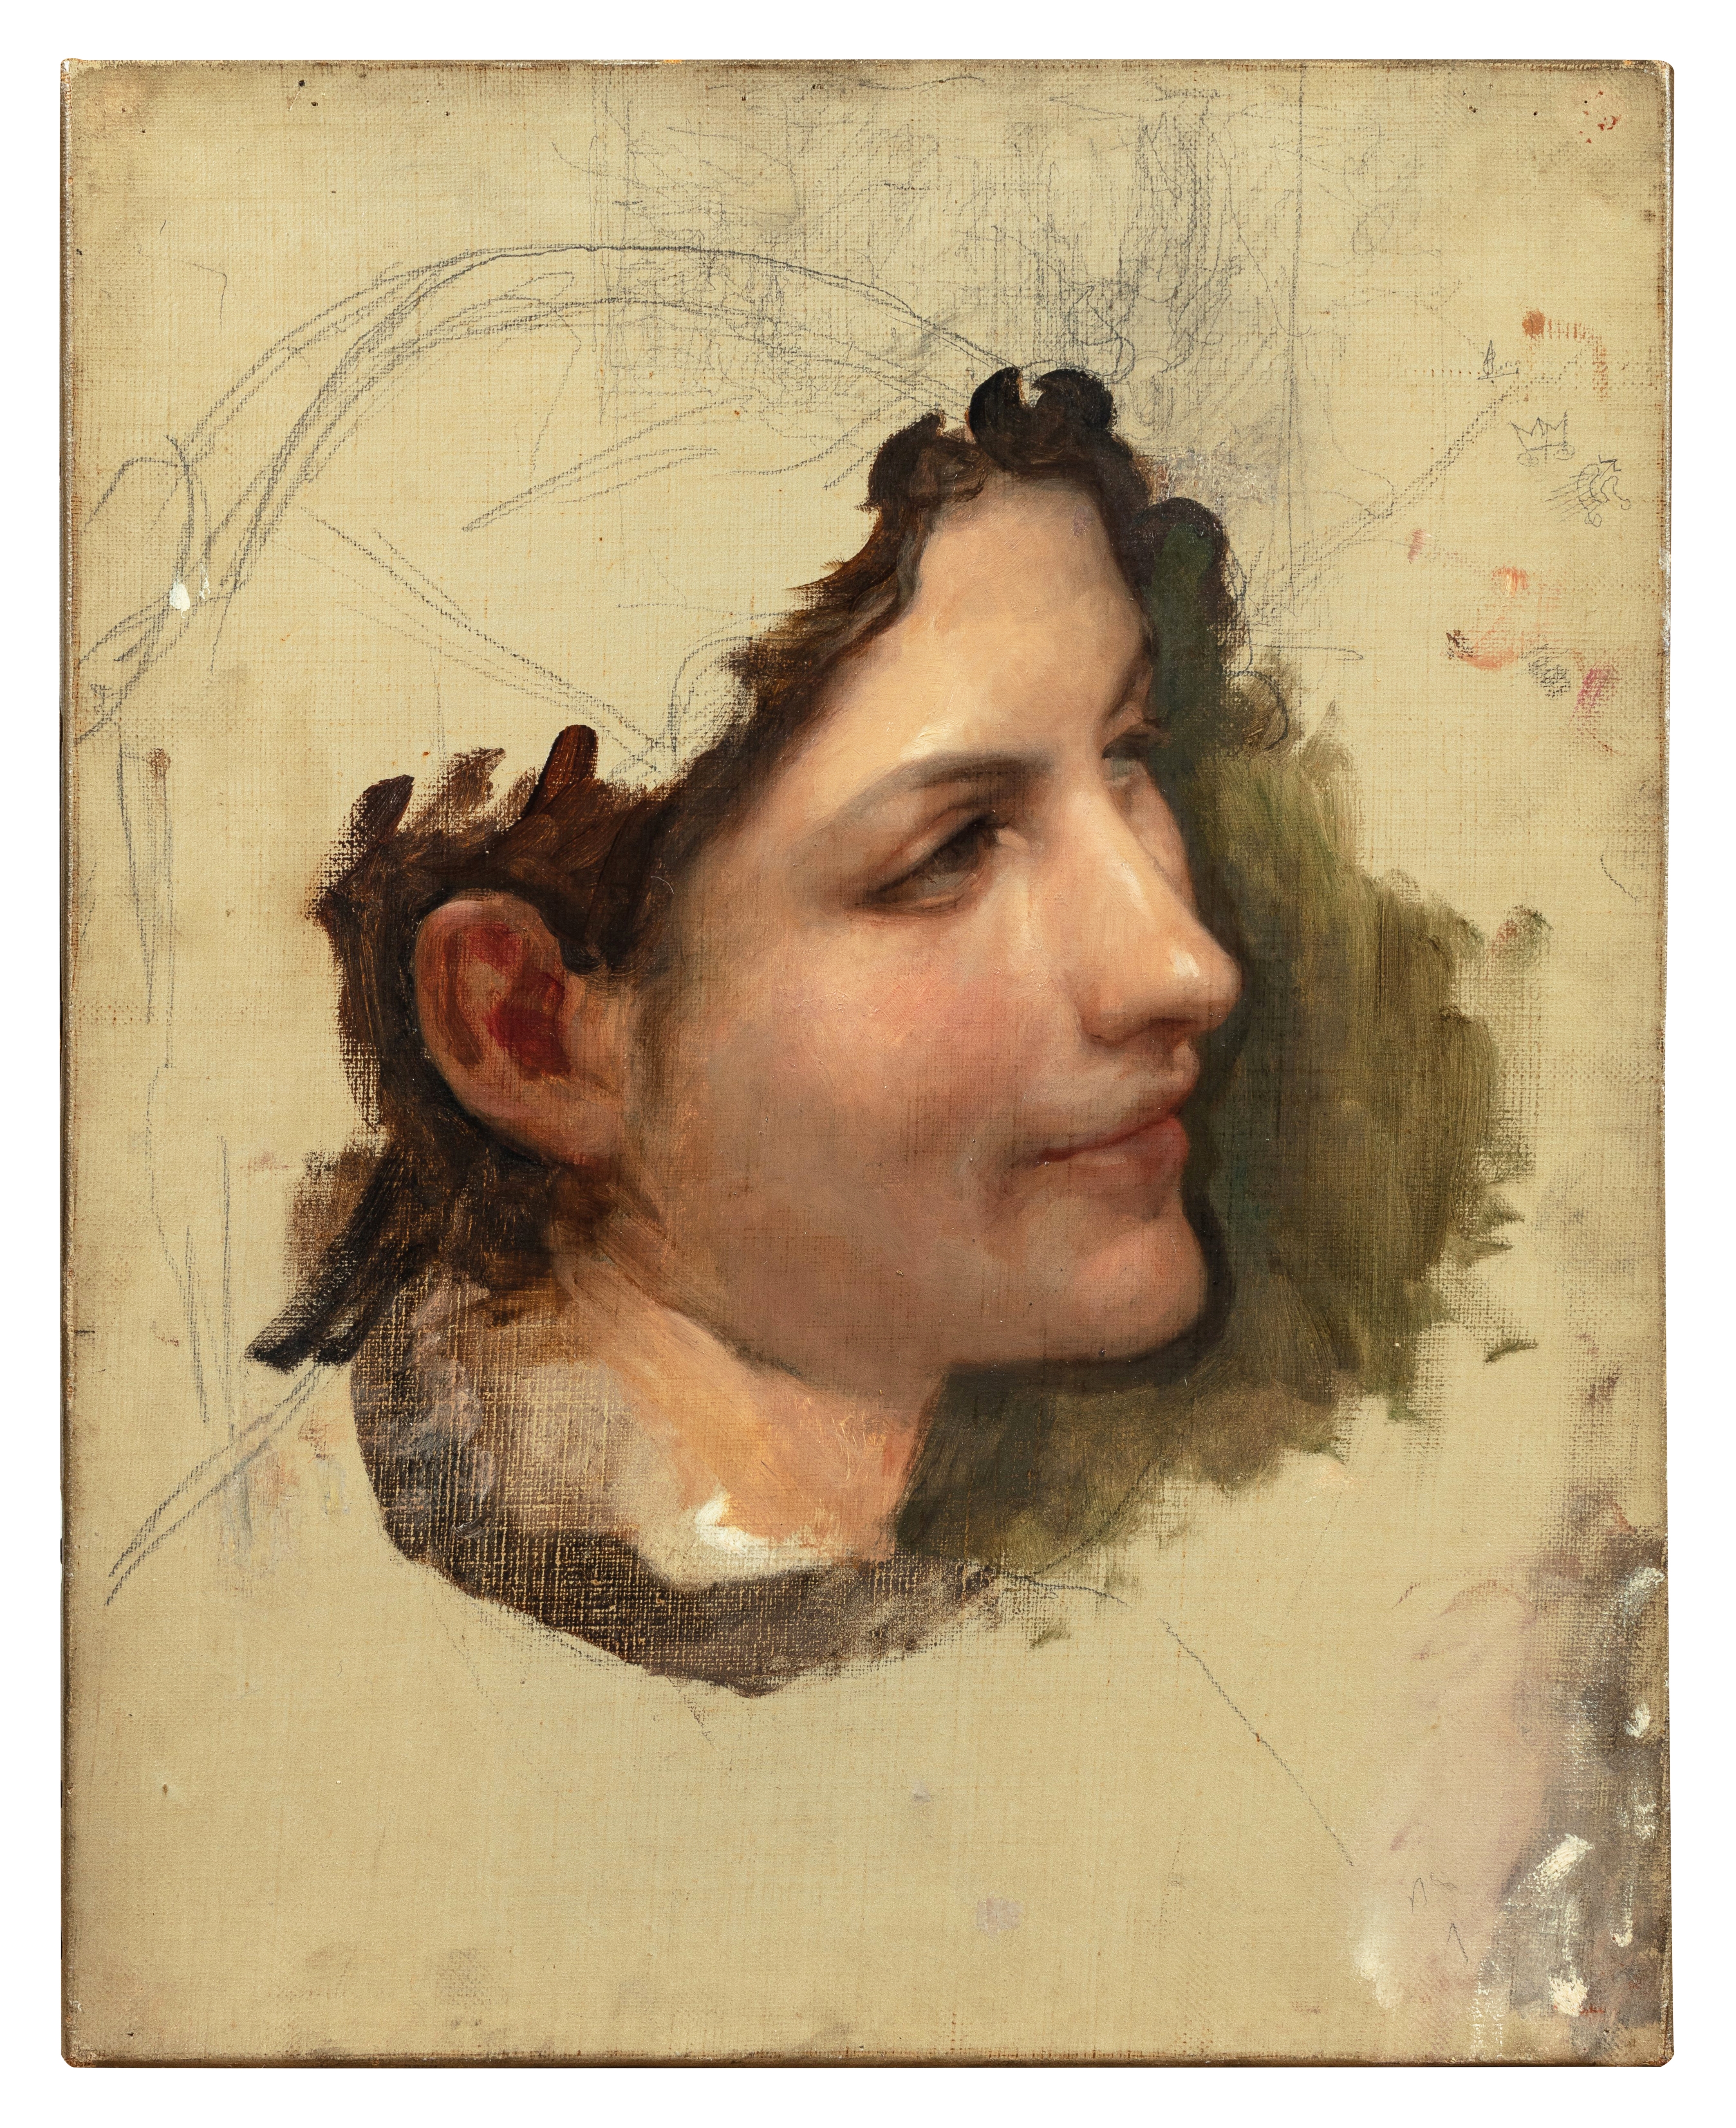 Artwork by William Adolphe Bouguereau, Etude de tête de femme, Made of oil on canvas